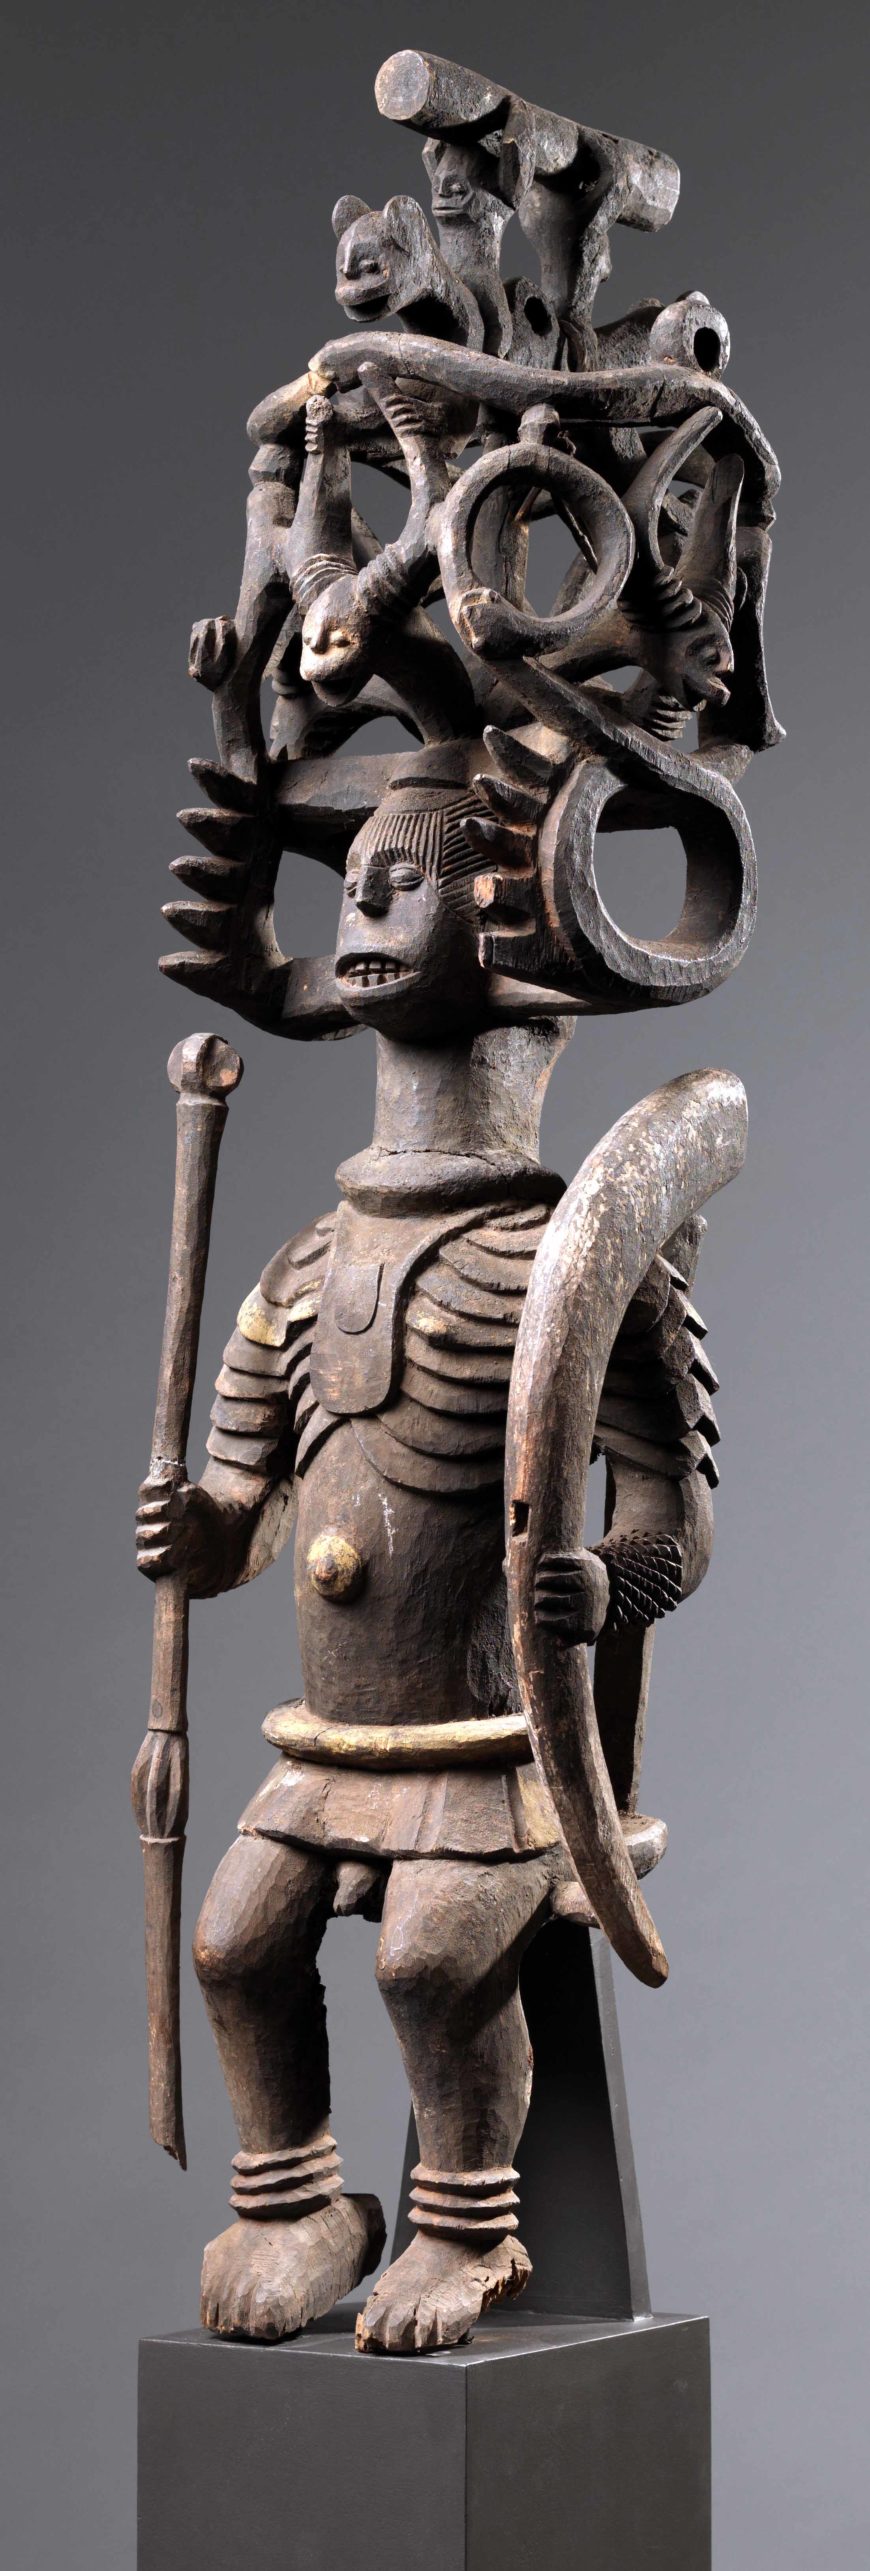 Ikenga, Igbo Peoples, Nigeria, first half of the 20th century, wood, 116.0 cm x 30.0 cm x 30.0 cm (Princeton University Art Museum)